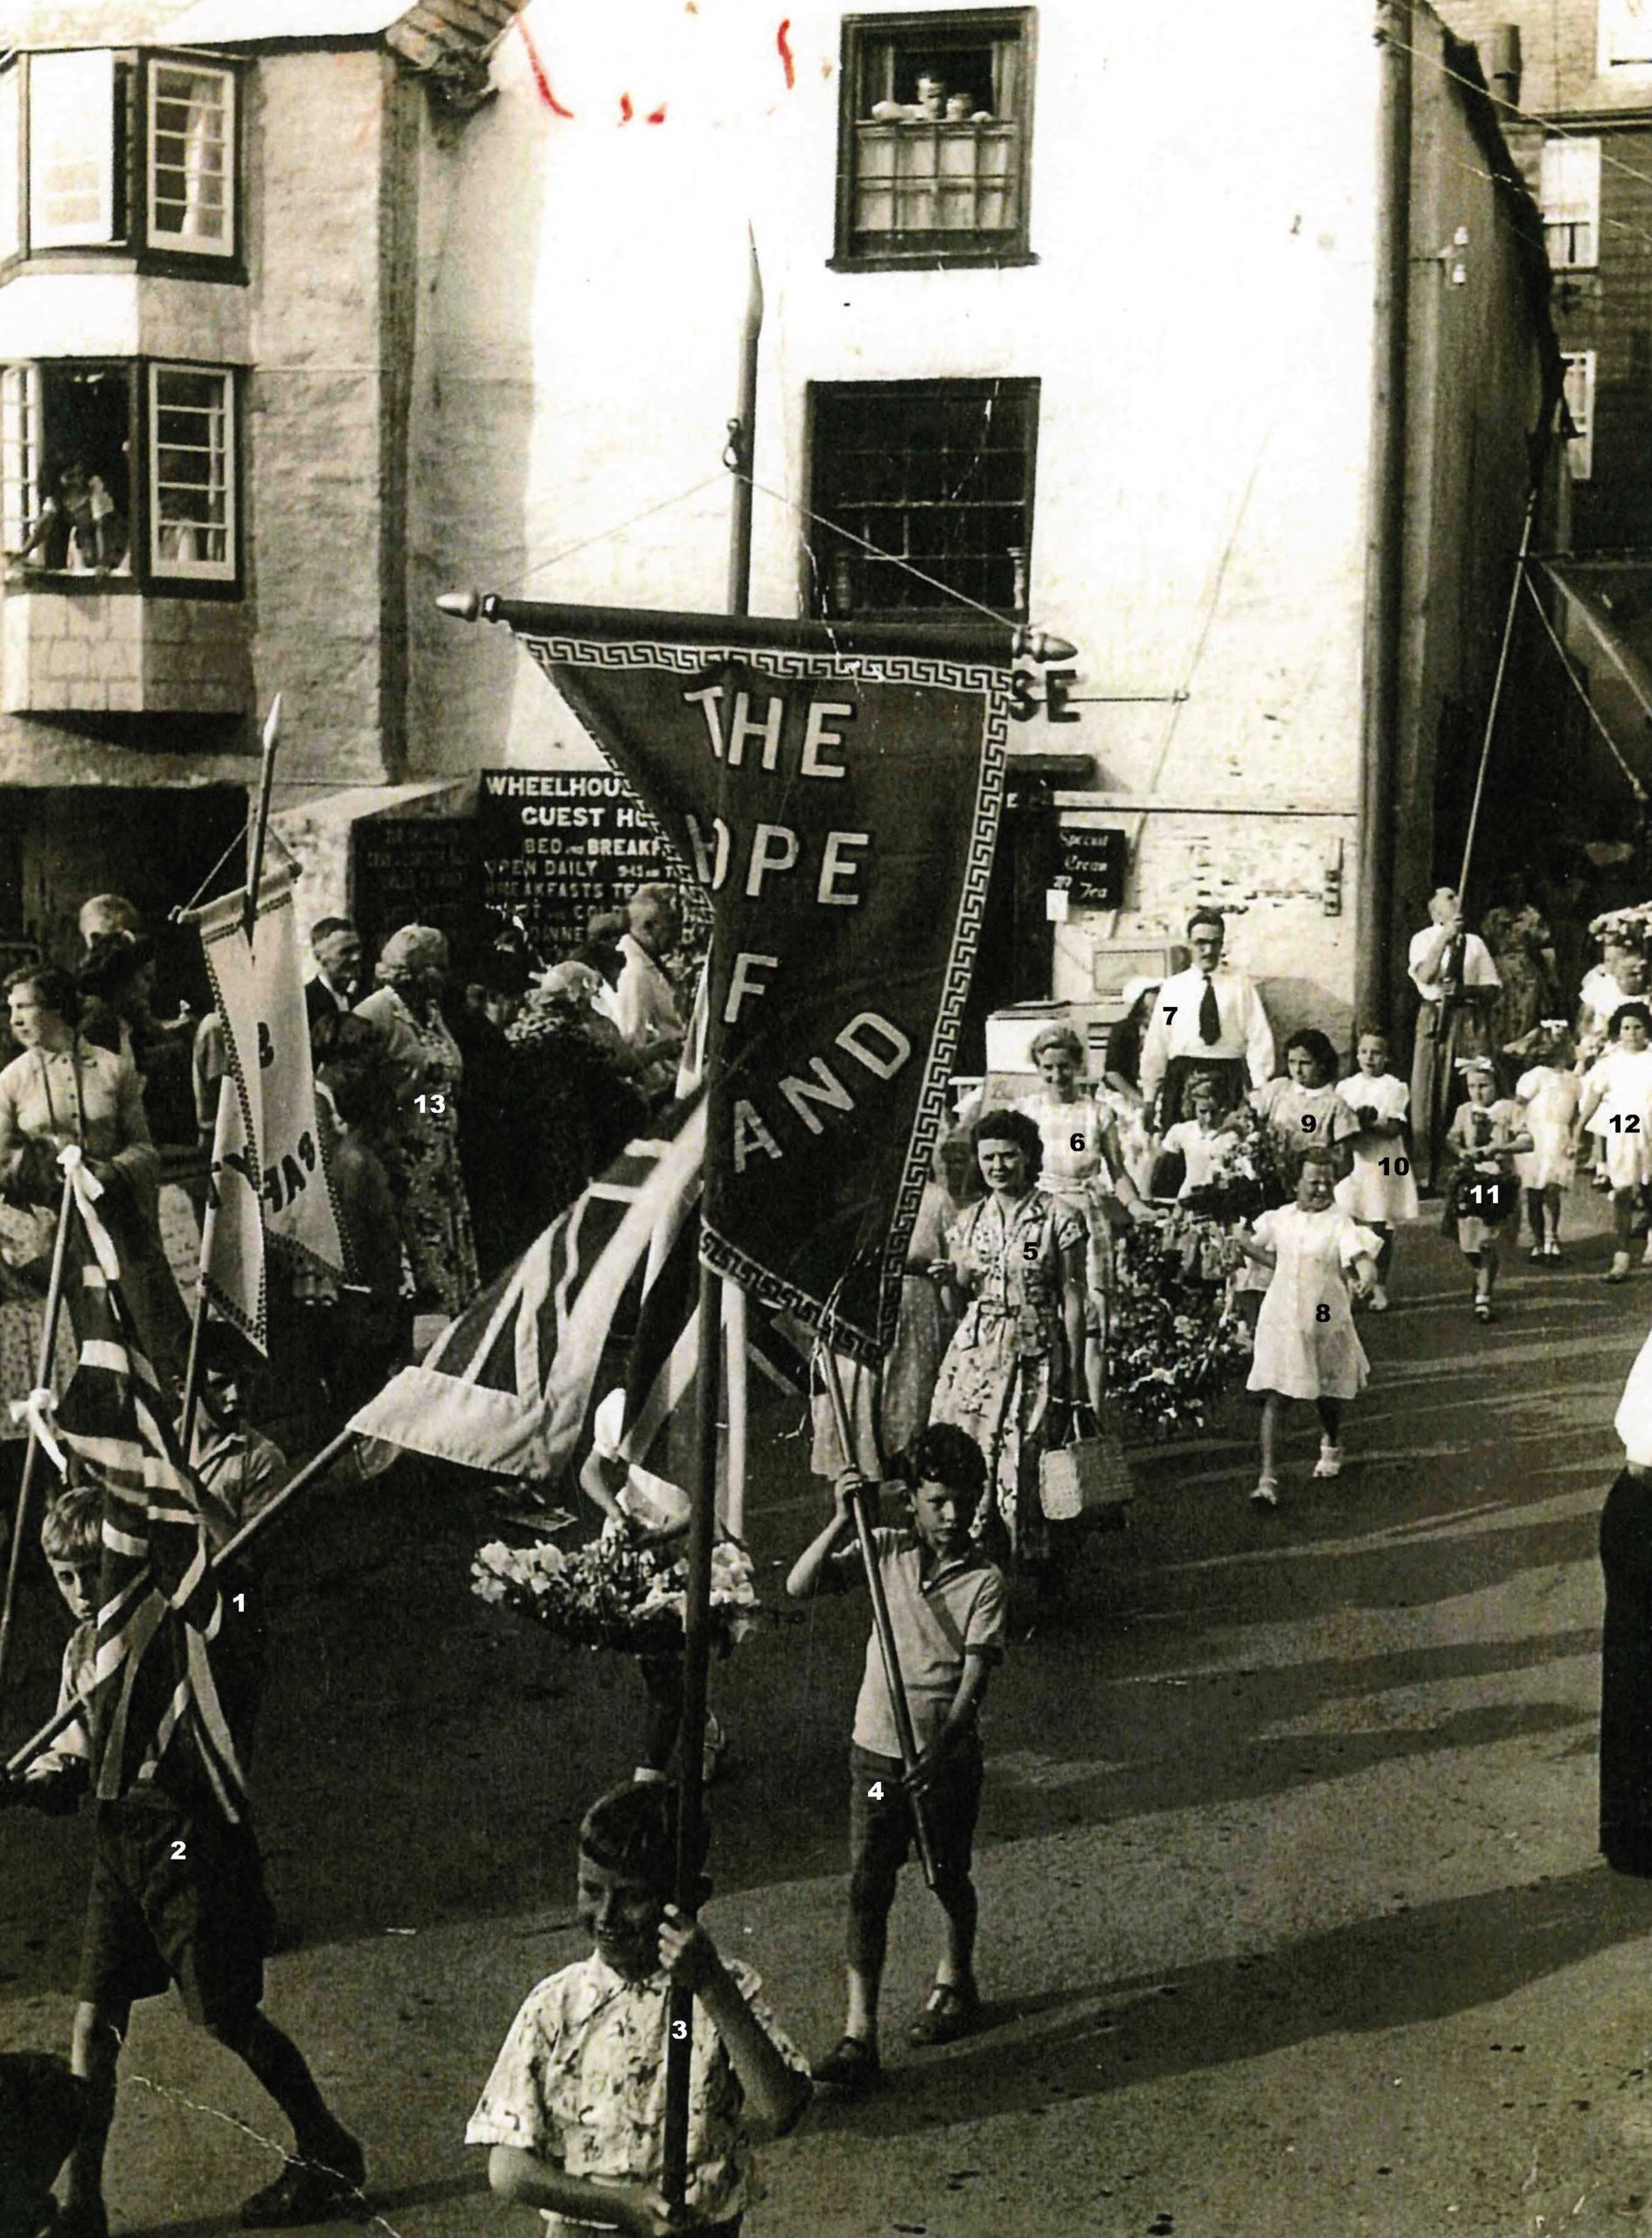 Band of Hope Temperance Rally, 1954ish